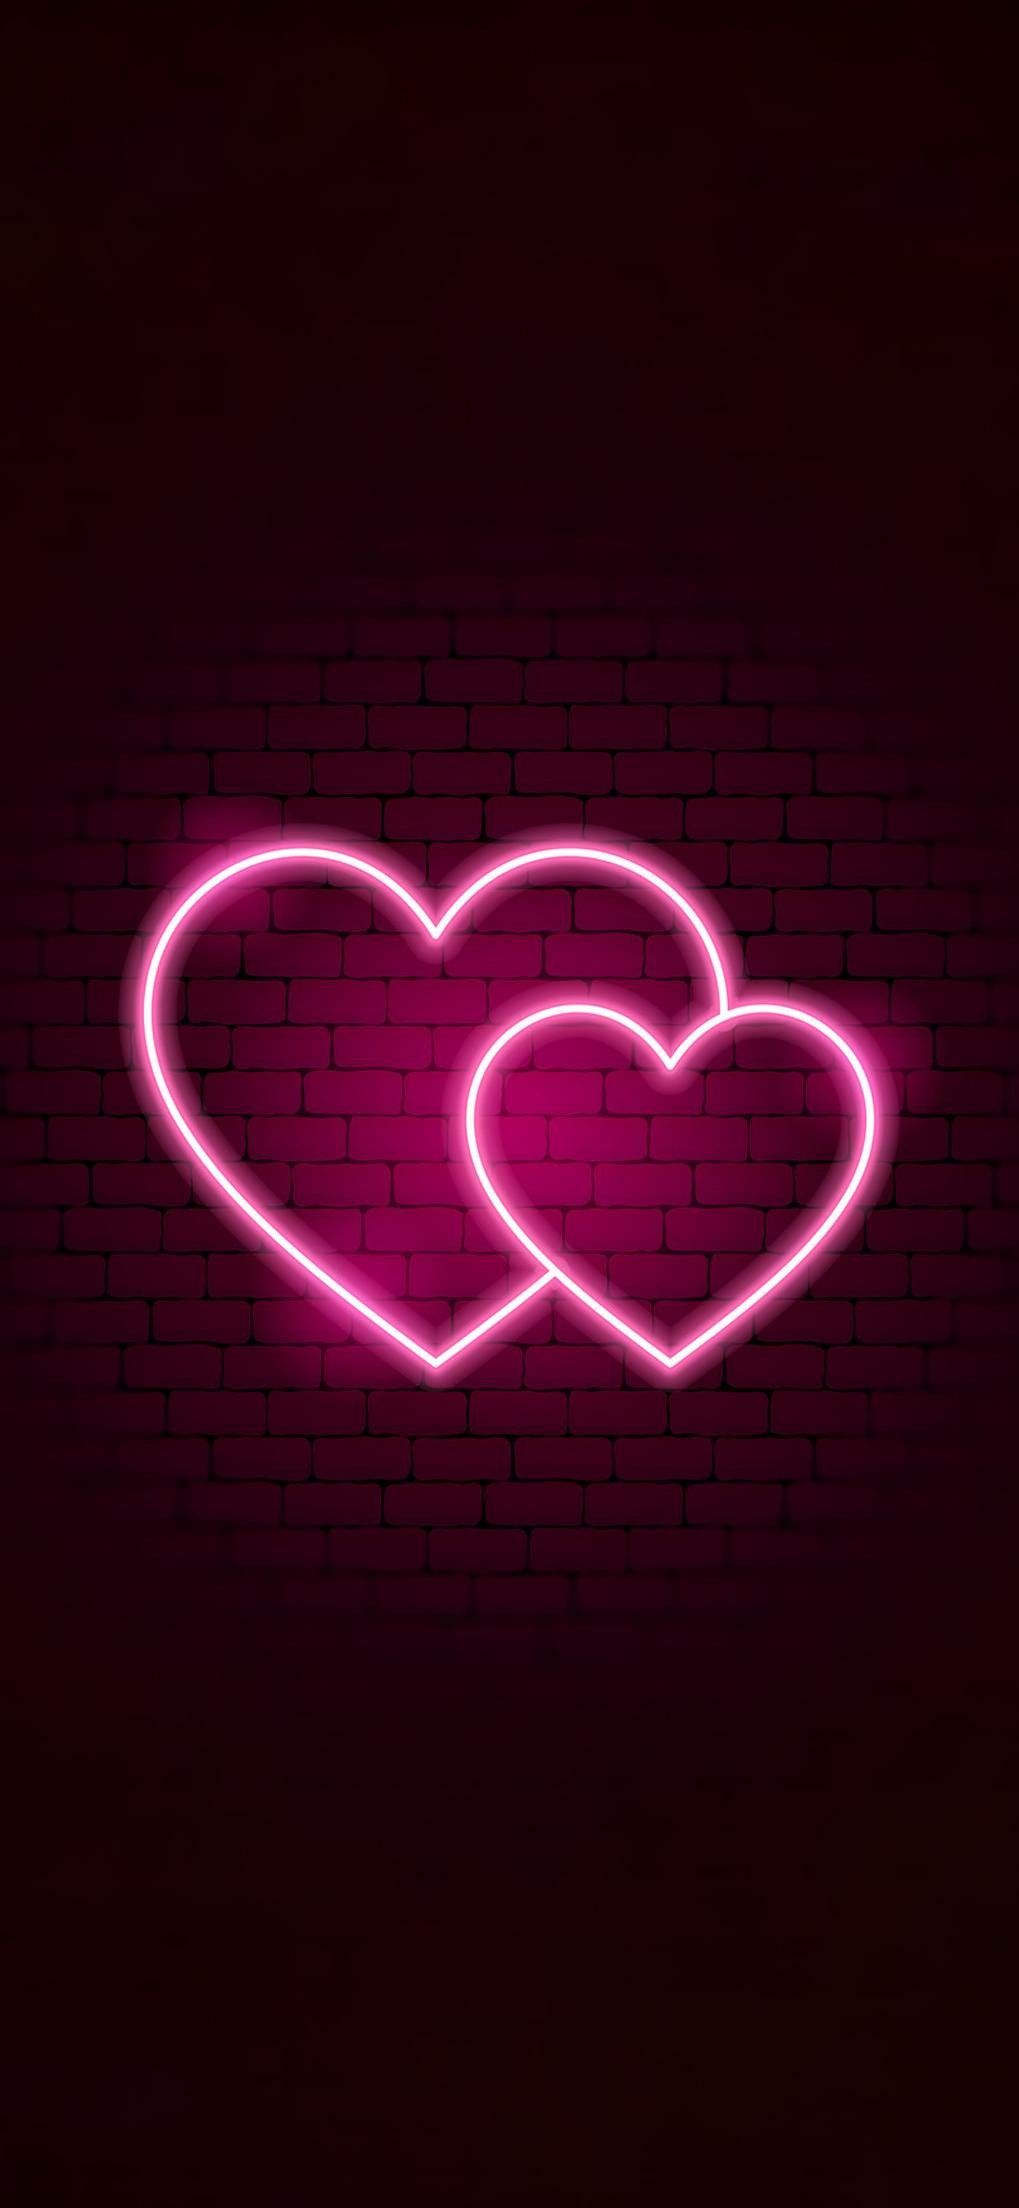 Aesthetic Red Heart Neon Wallpaper